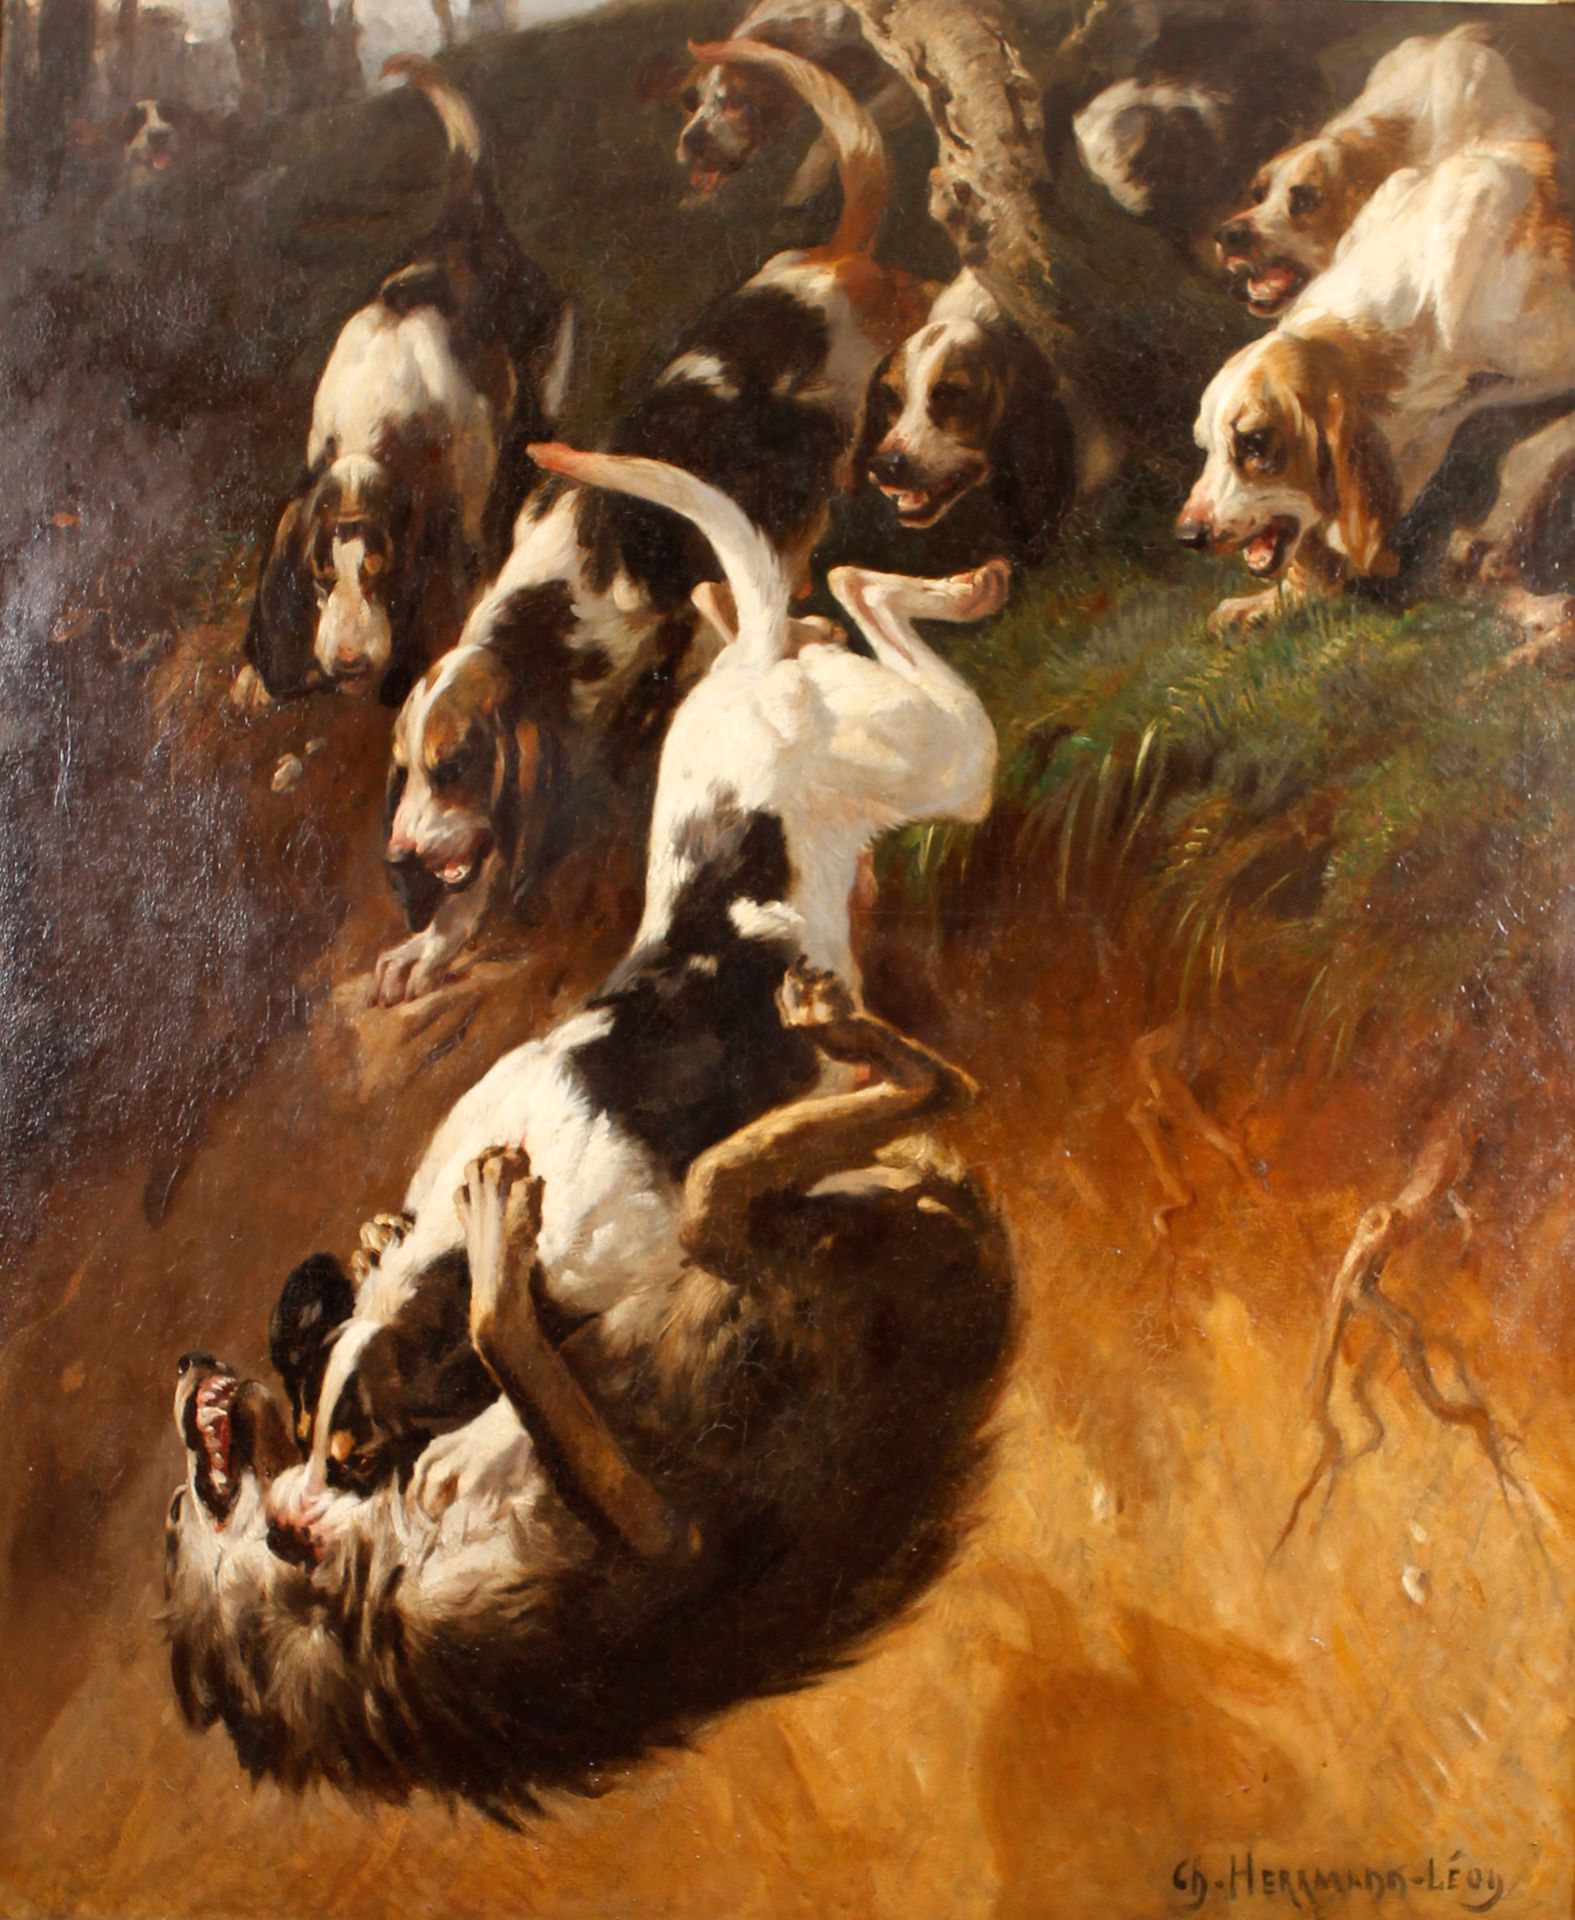 Null HERMANN-LEON Charles (1838-1907)

Perros de presa atacando a un lobo

Óleo &hellip;